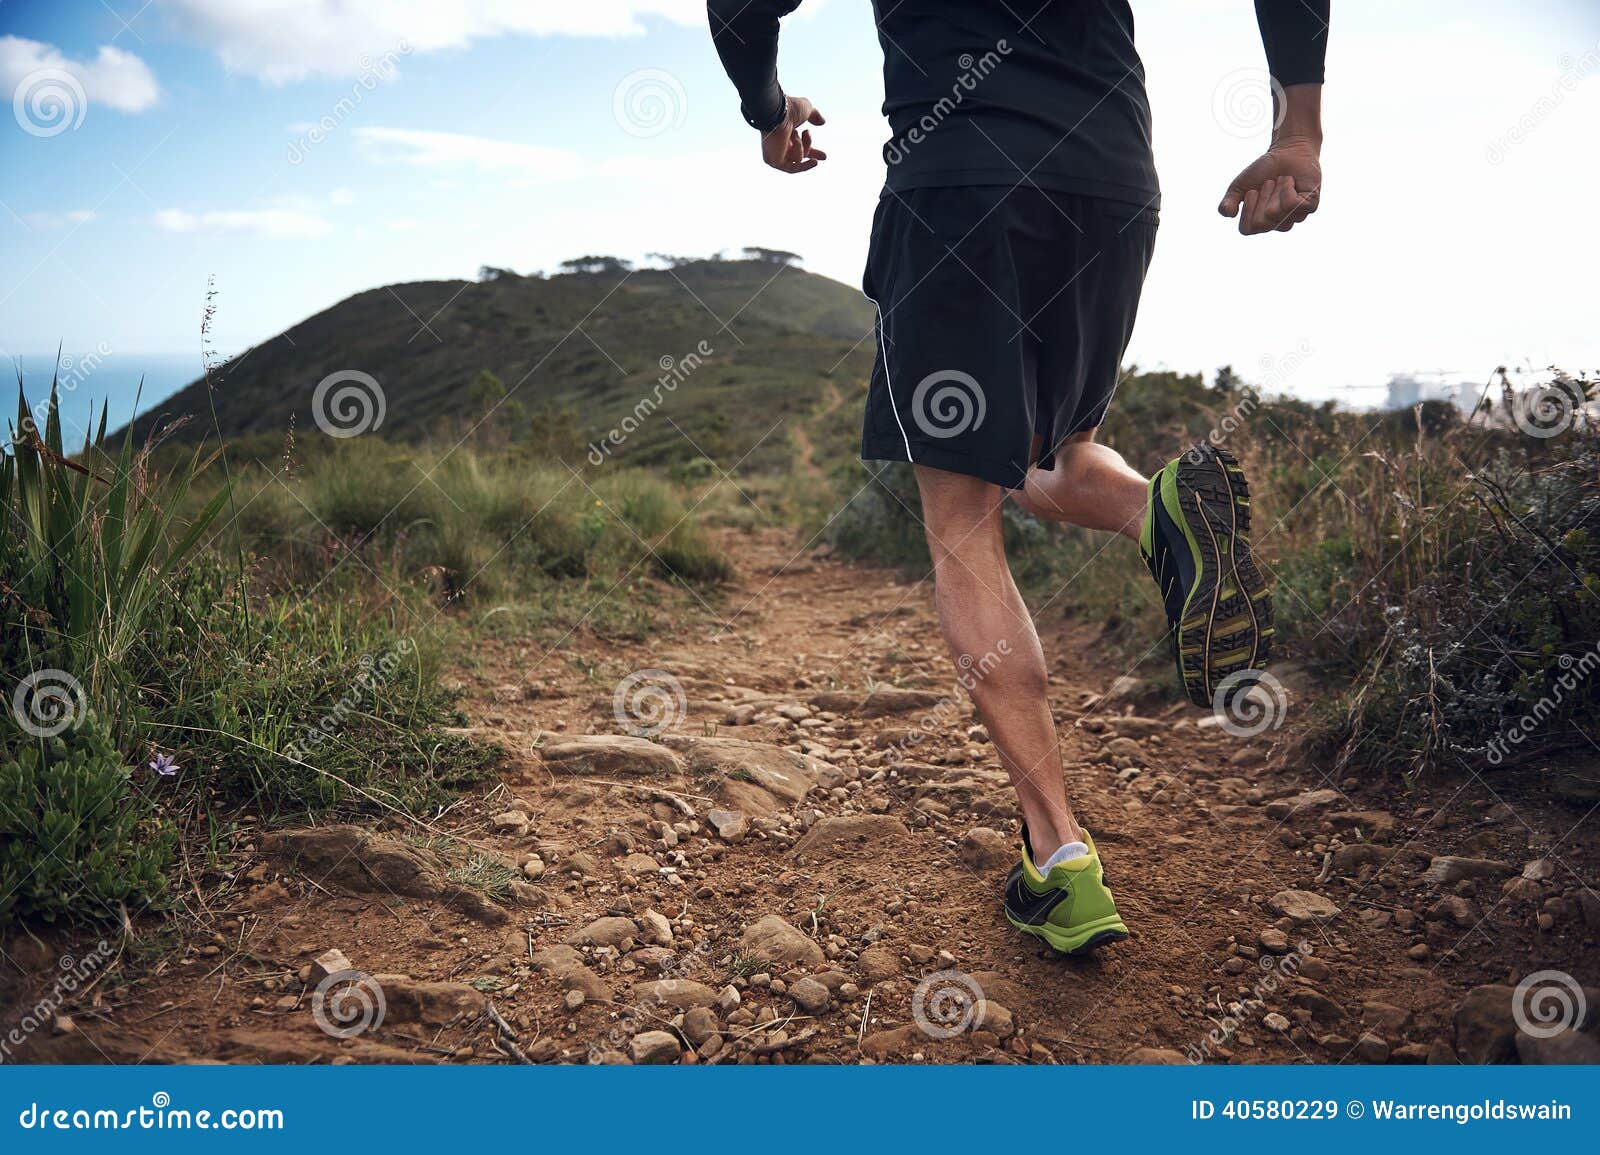 trail running fitness